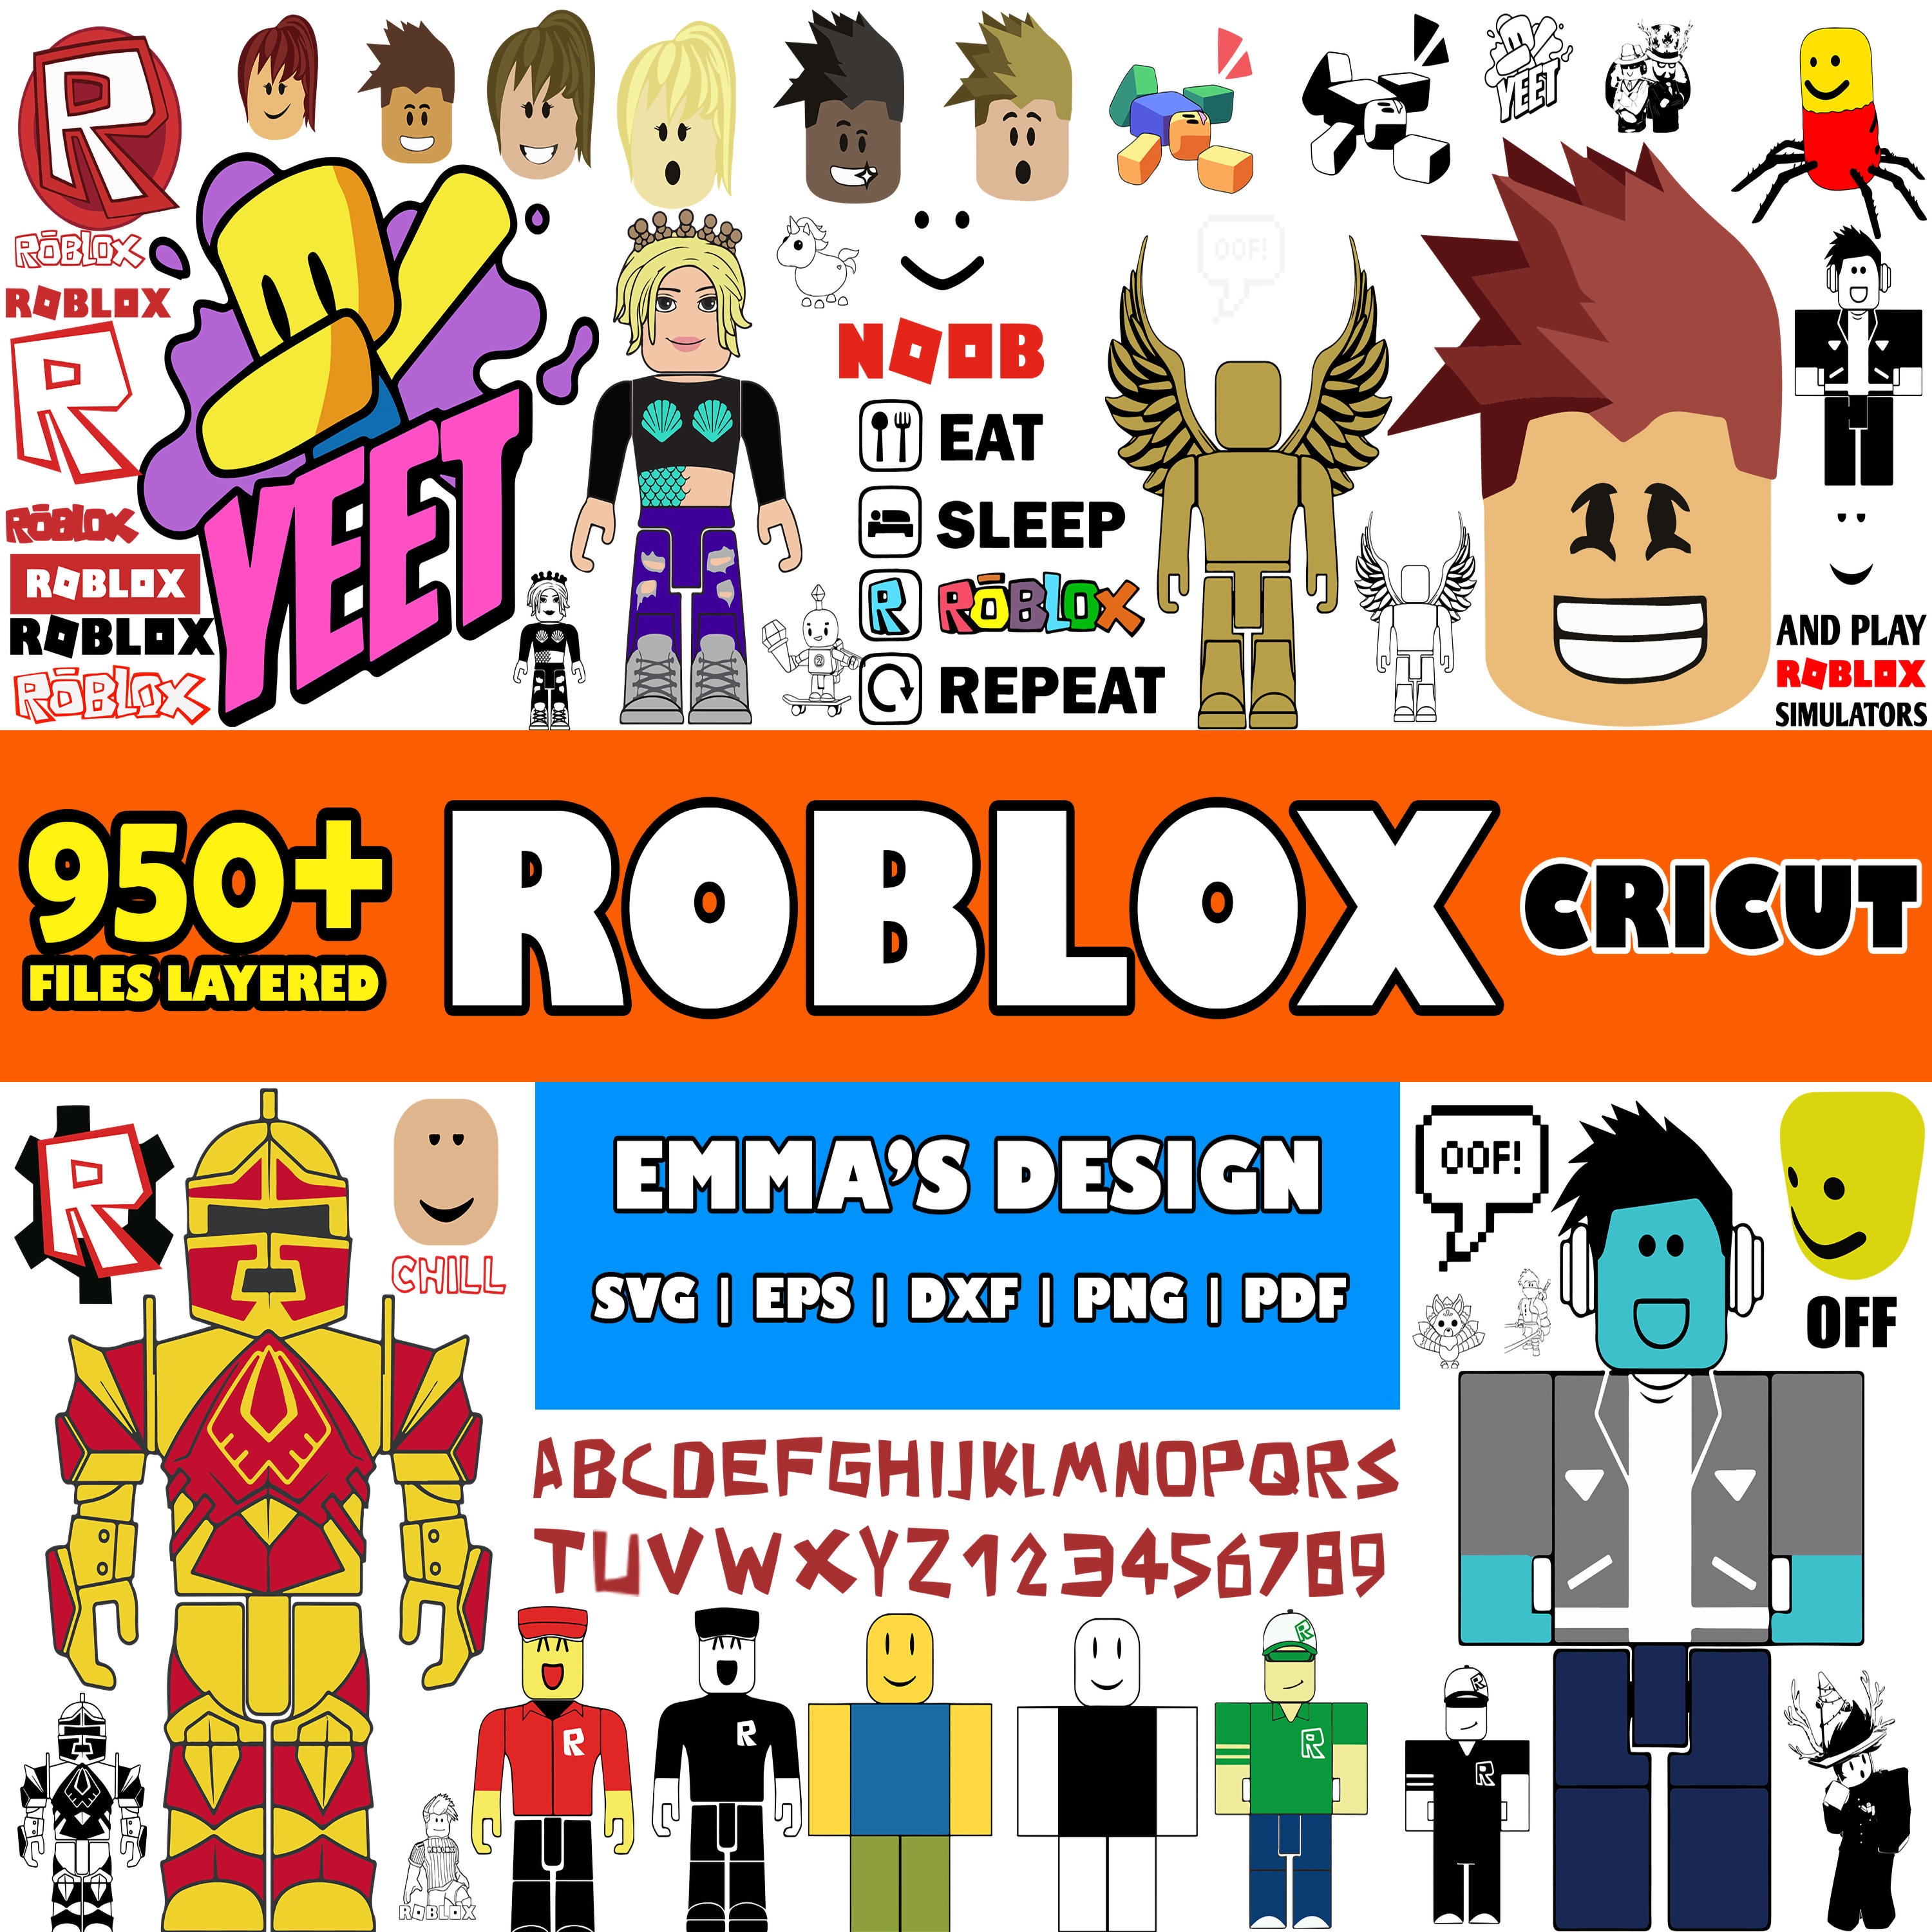 Roblox Face SVG, Roblox Face Decal, Roblox Man Face Transparent PNG, Roblox  Cricut Design, Roblox Silhouette